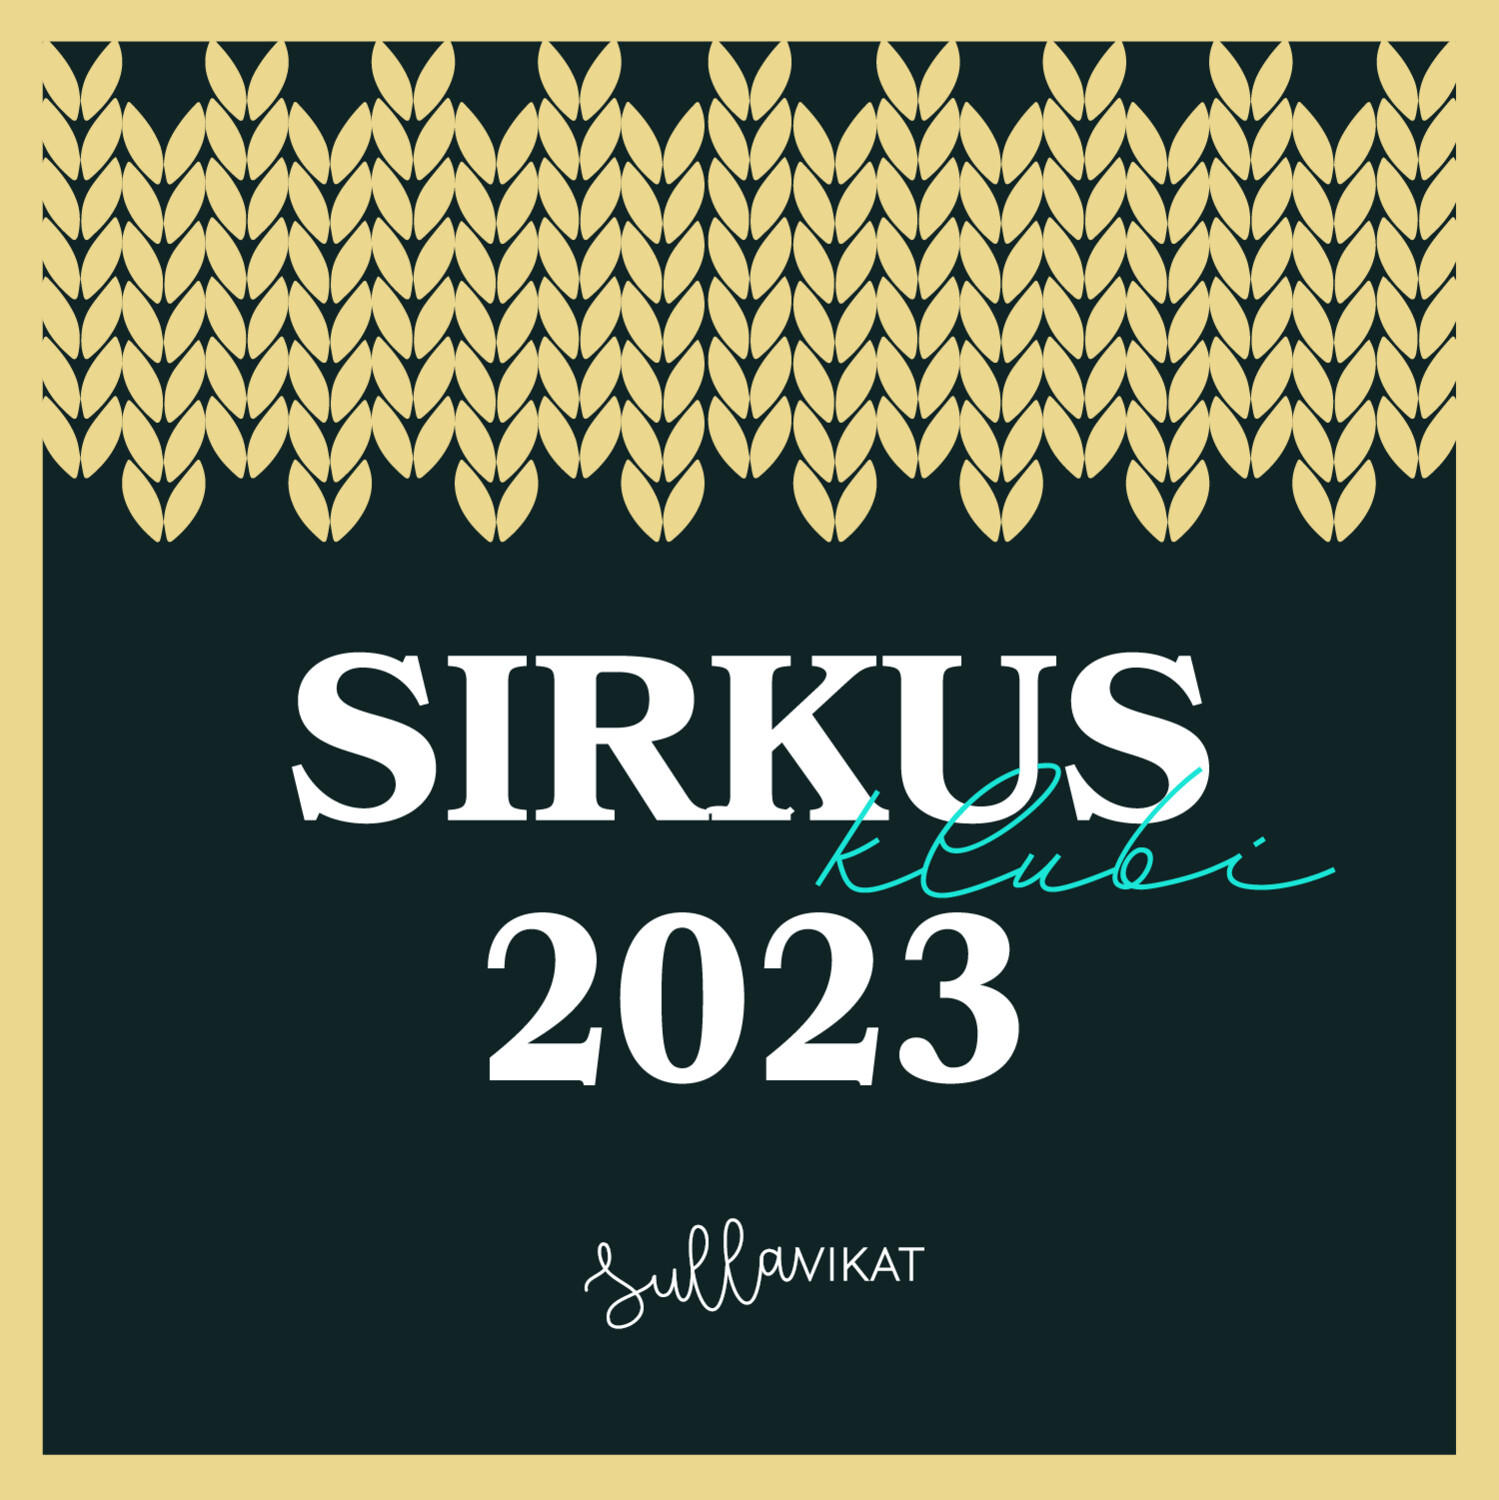 SIRKUS-klubi 2023 ENNAKKOMYYNTI!